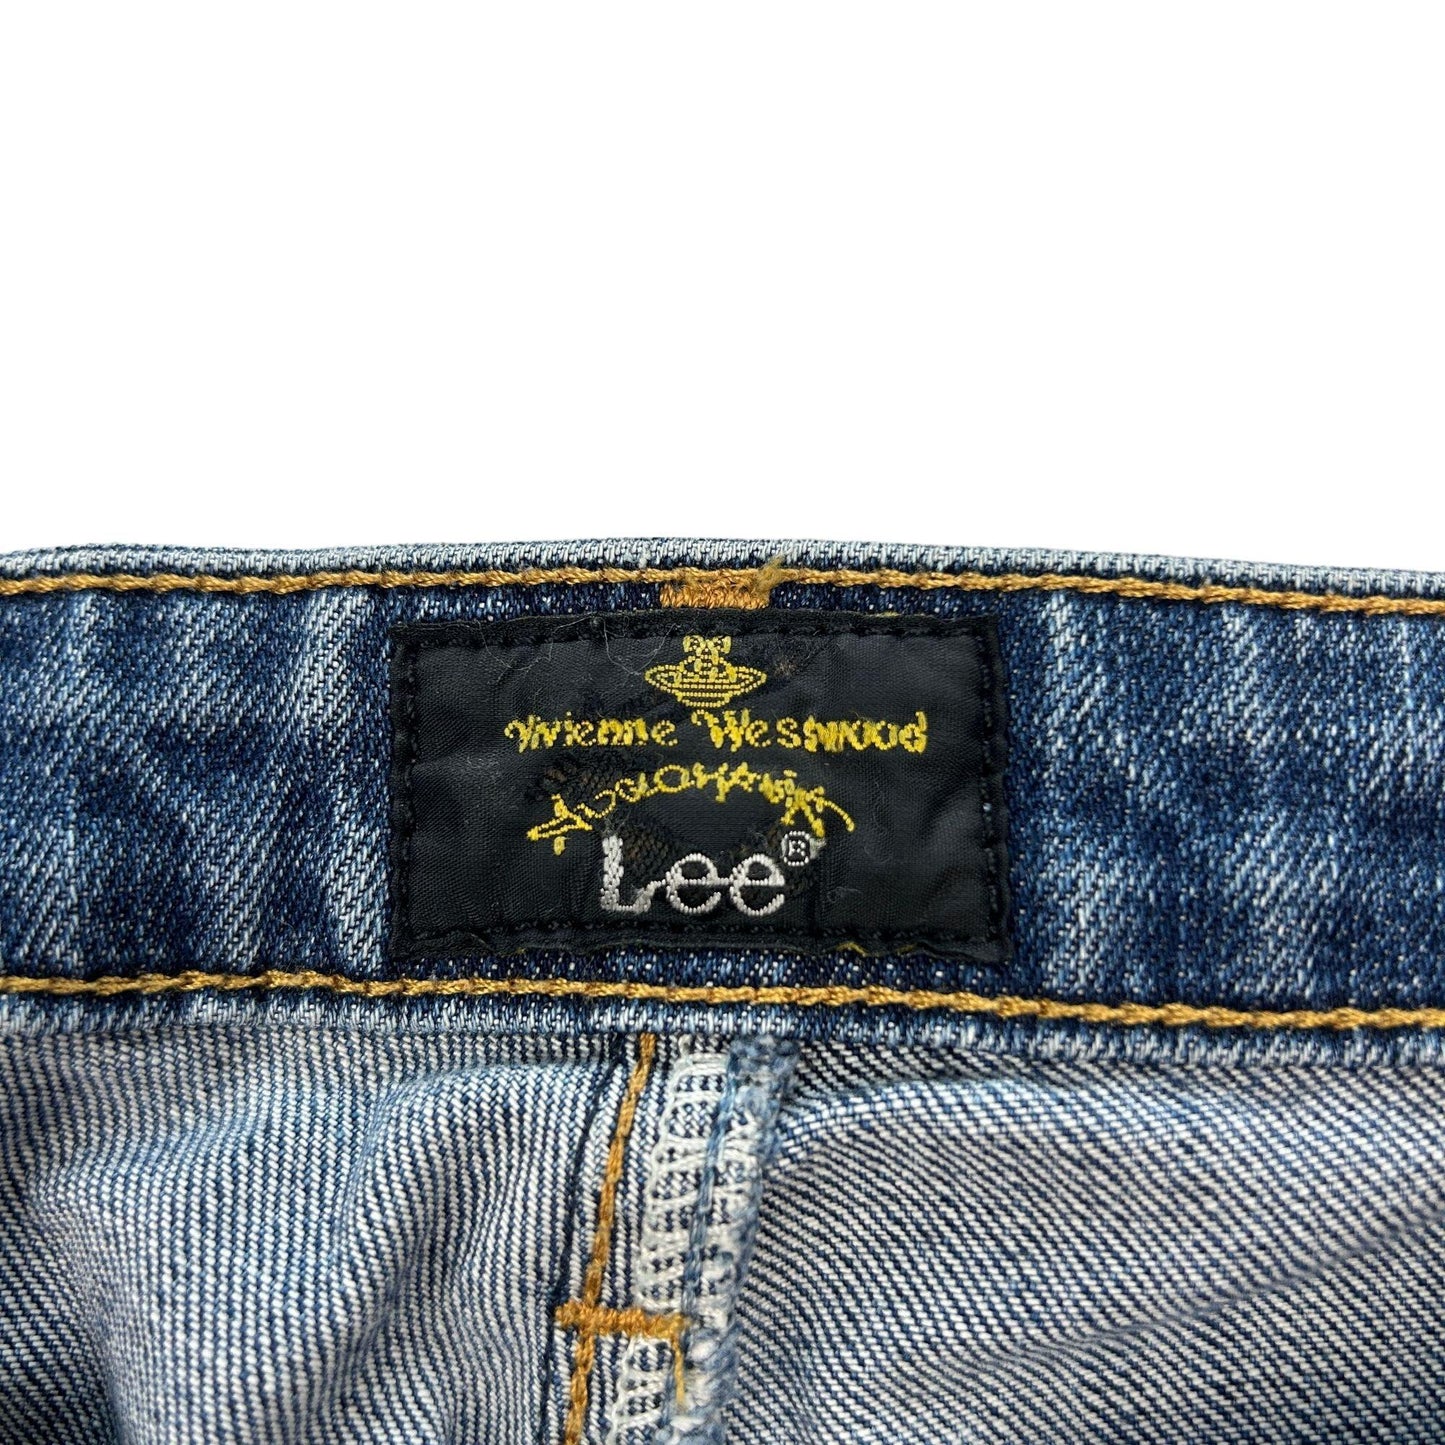 Vintage Vivenne Westwood Lee Jeans Size Women's W29 - Known Source